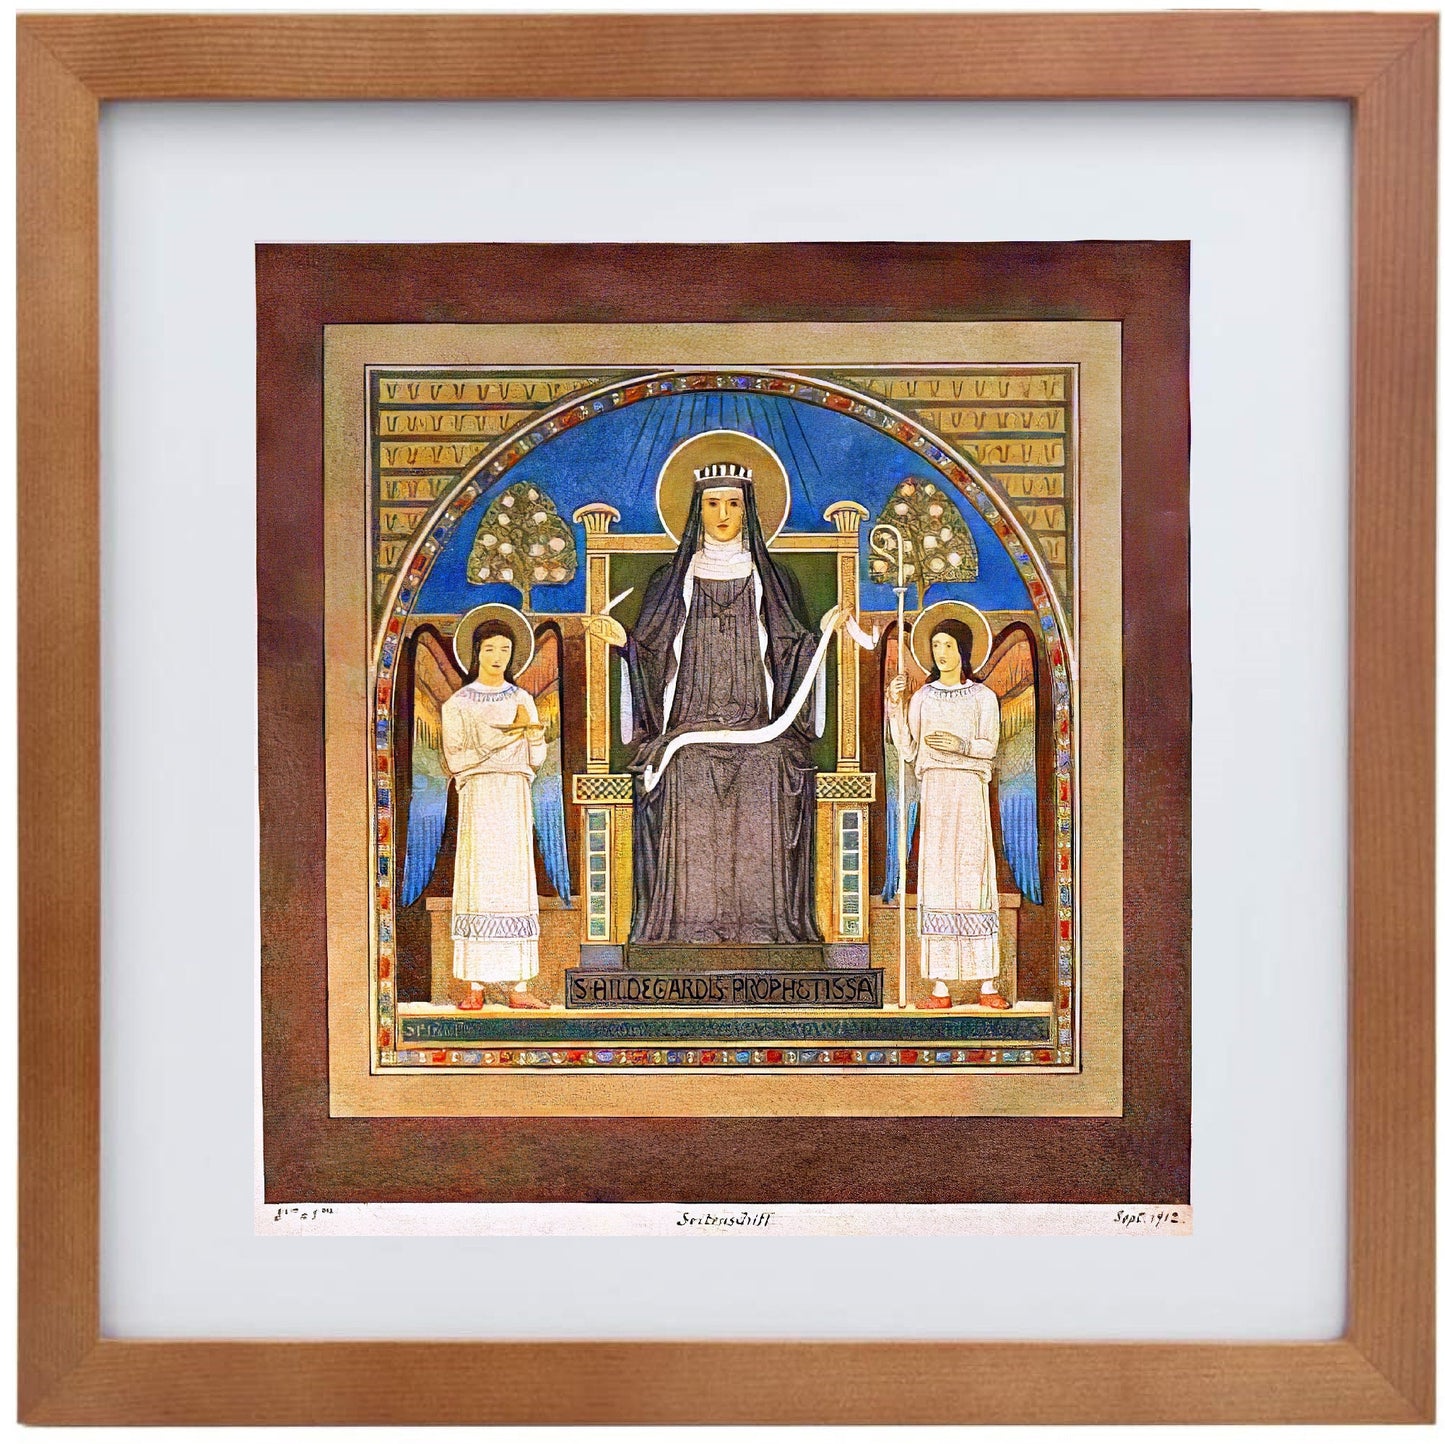 St. Hildegard of Bingen Prophetess – Painted by Benedictine Monks – Catholic Art Print – Archival Quality